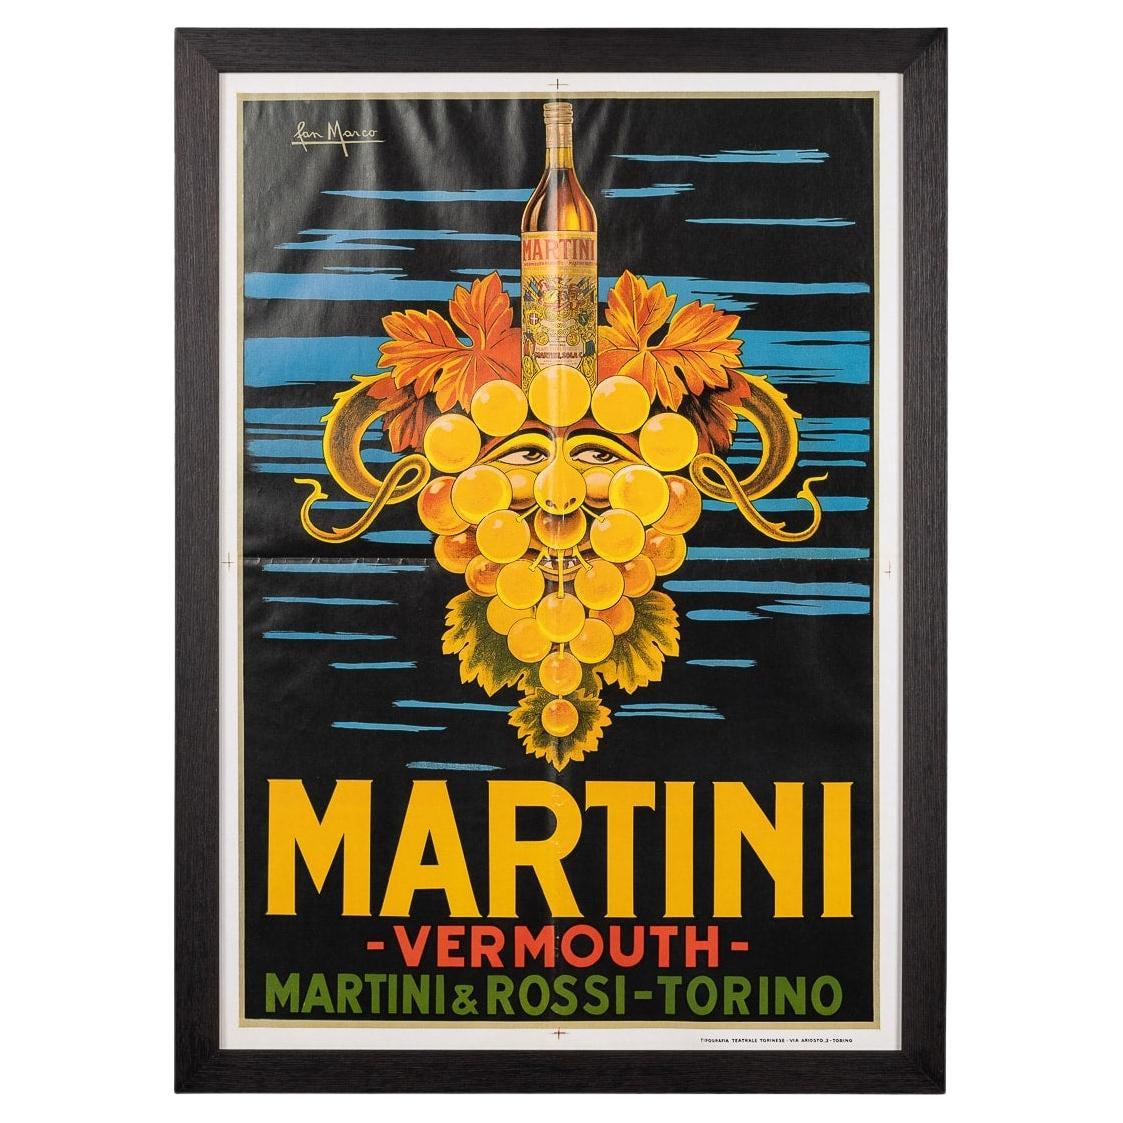 Gerahmtes Werbeplakat für Martini, Italien, ca. 1970